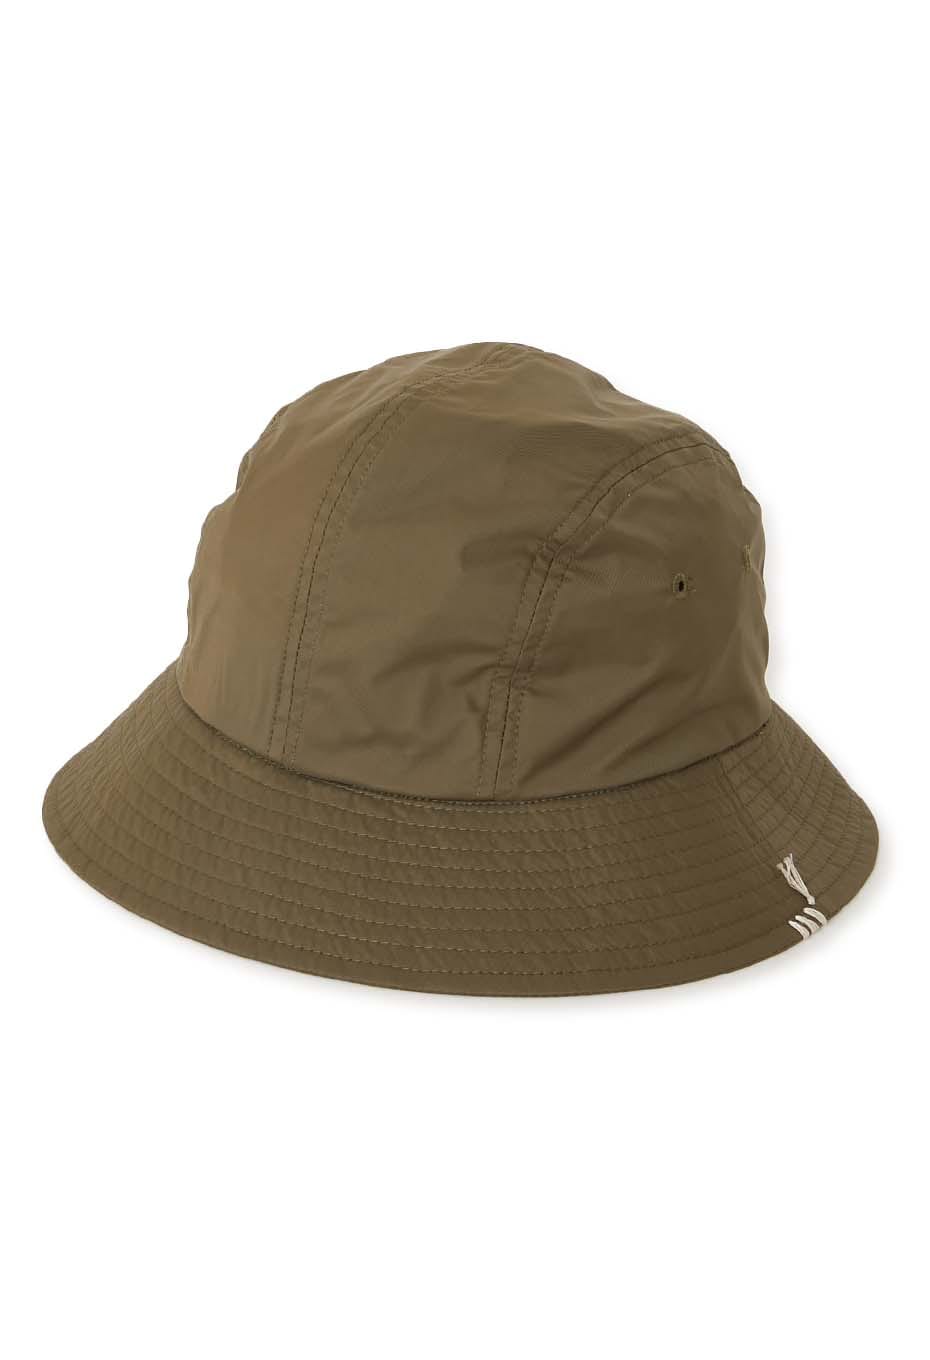 HUNTISM NYLON CAMP HAT